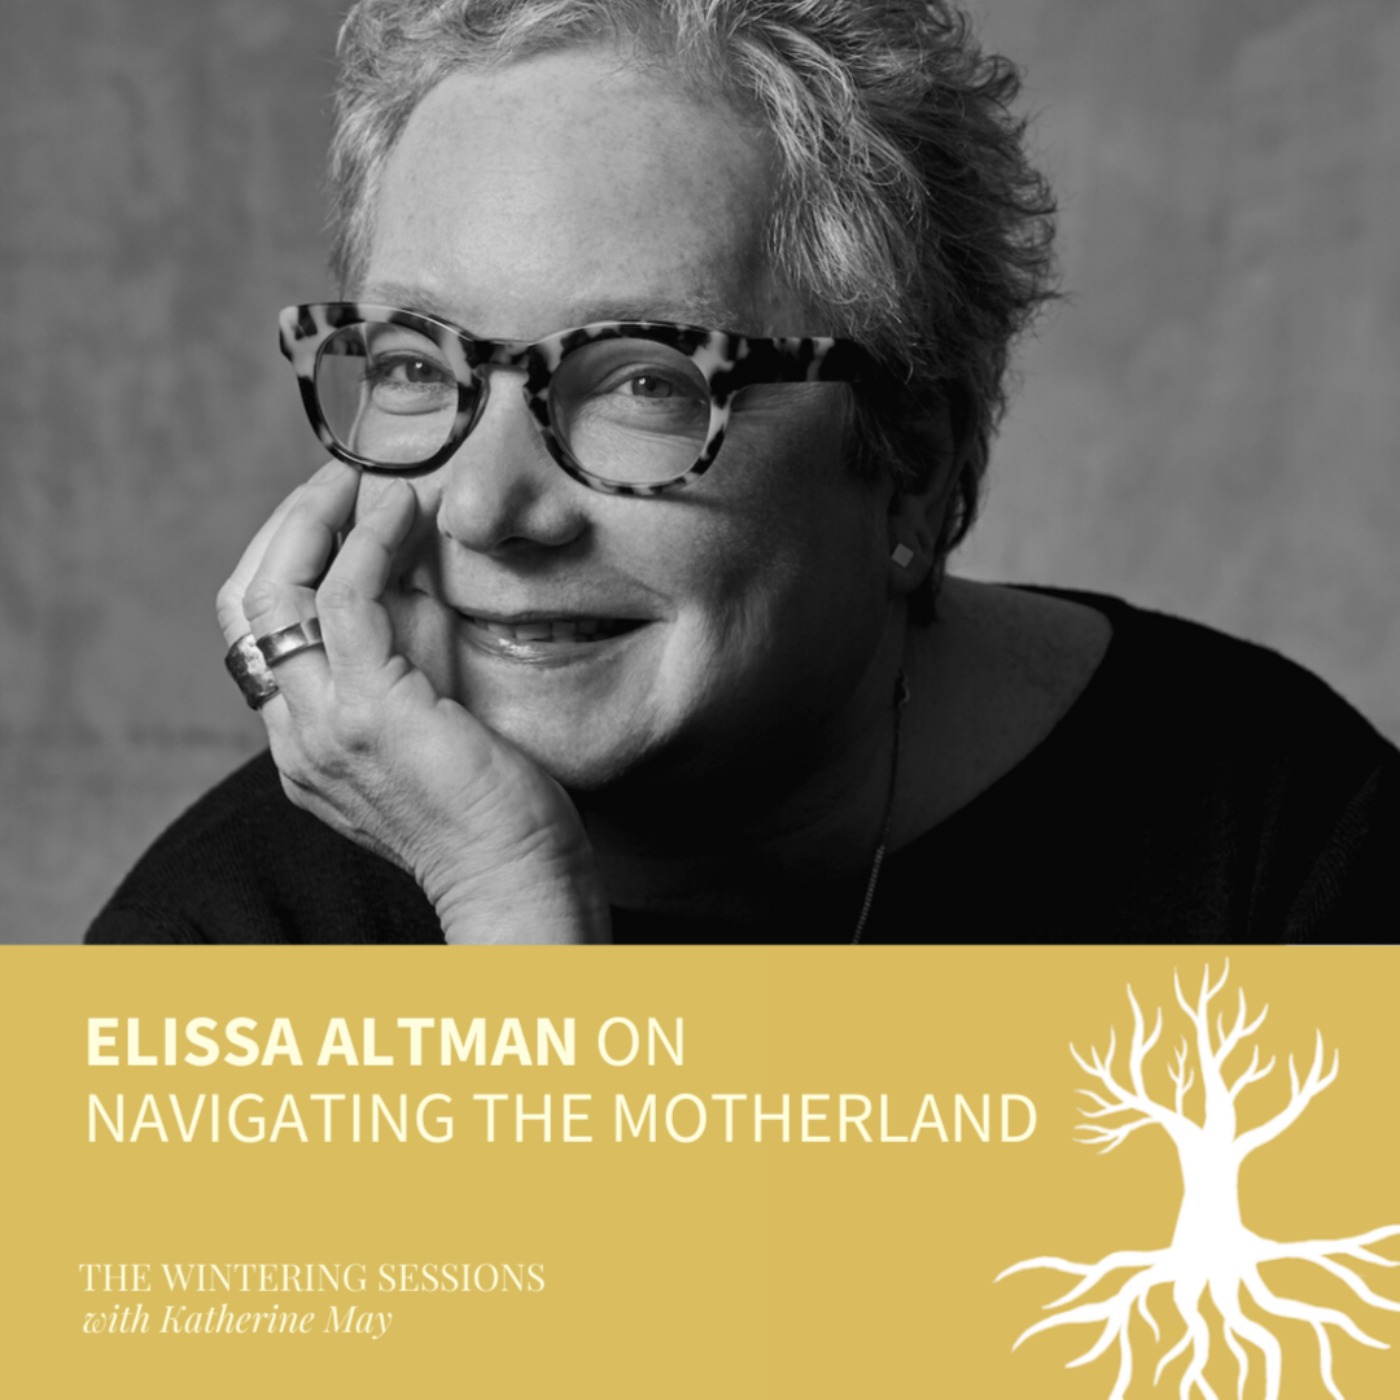 Elissa Altman on navigating the Motherland